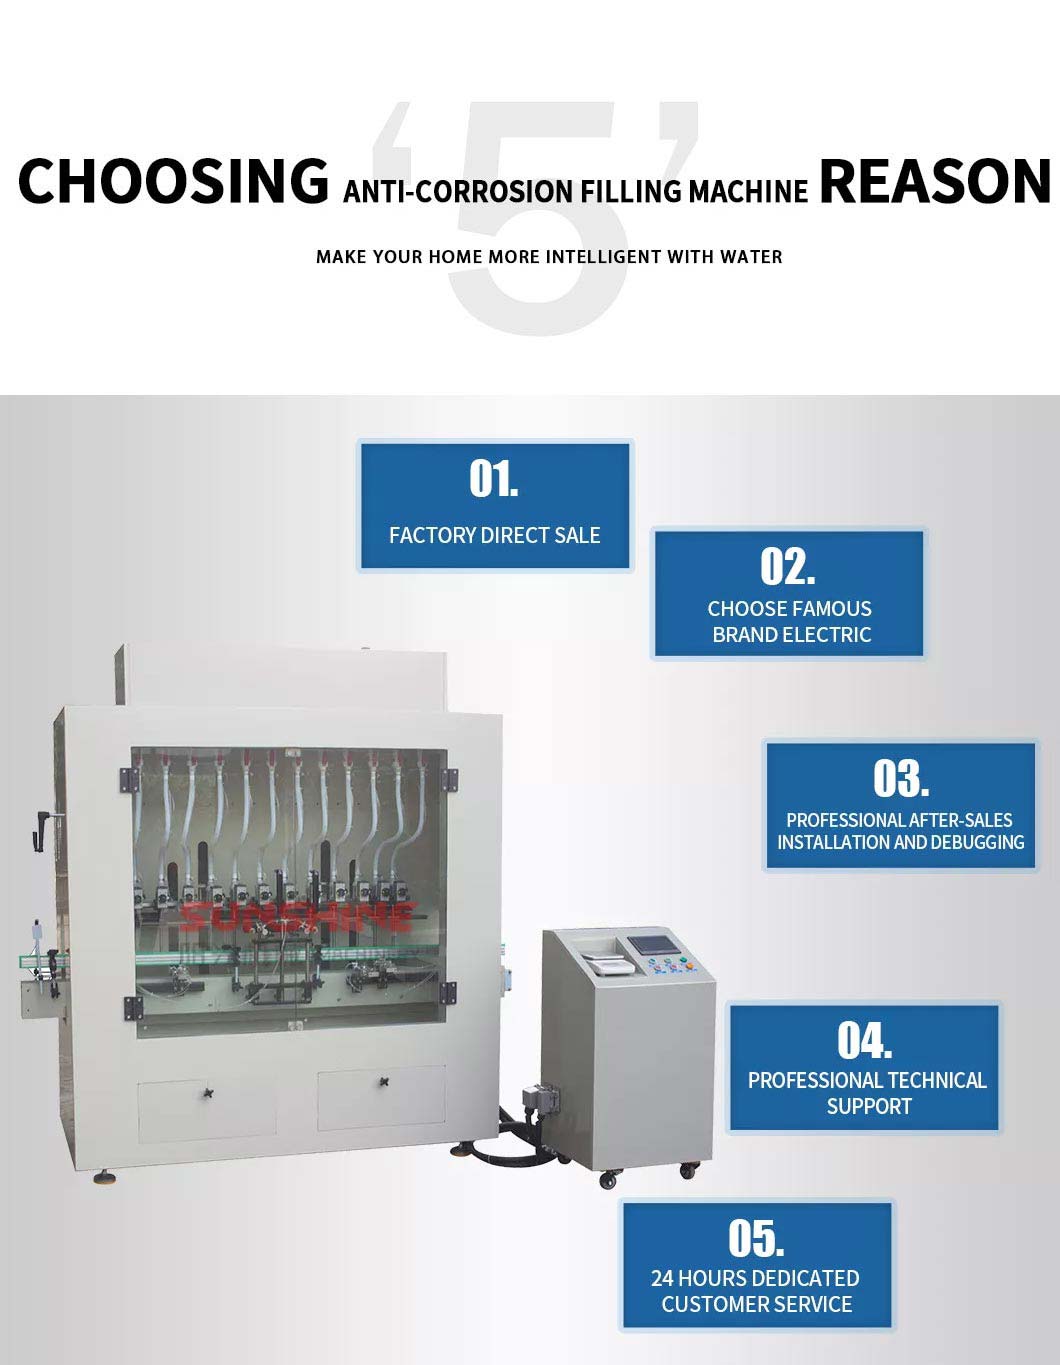 Details of the Automatic Anti-Corrosion Liquid Filling Machine